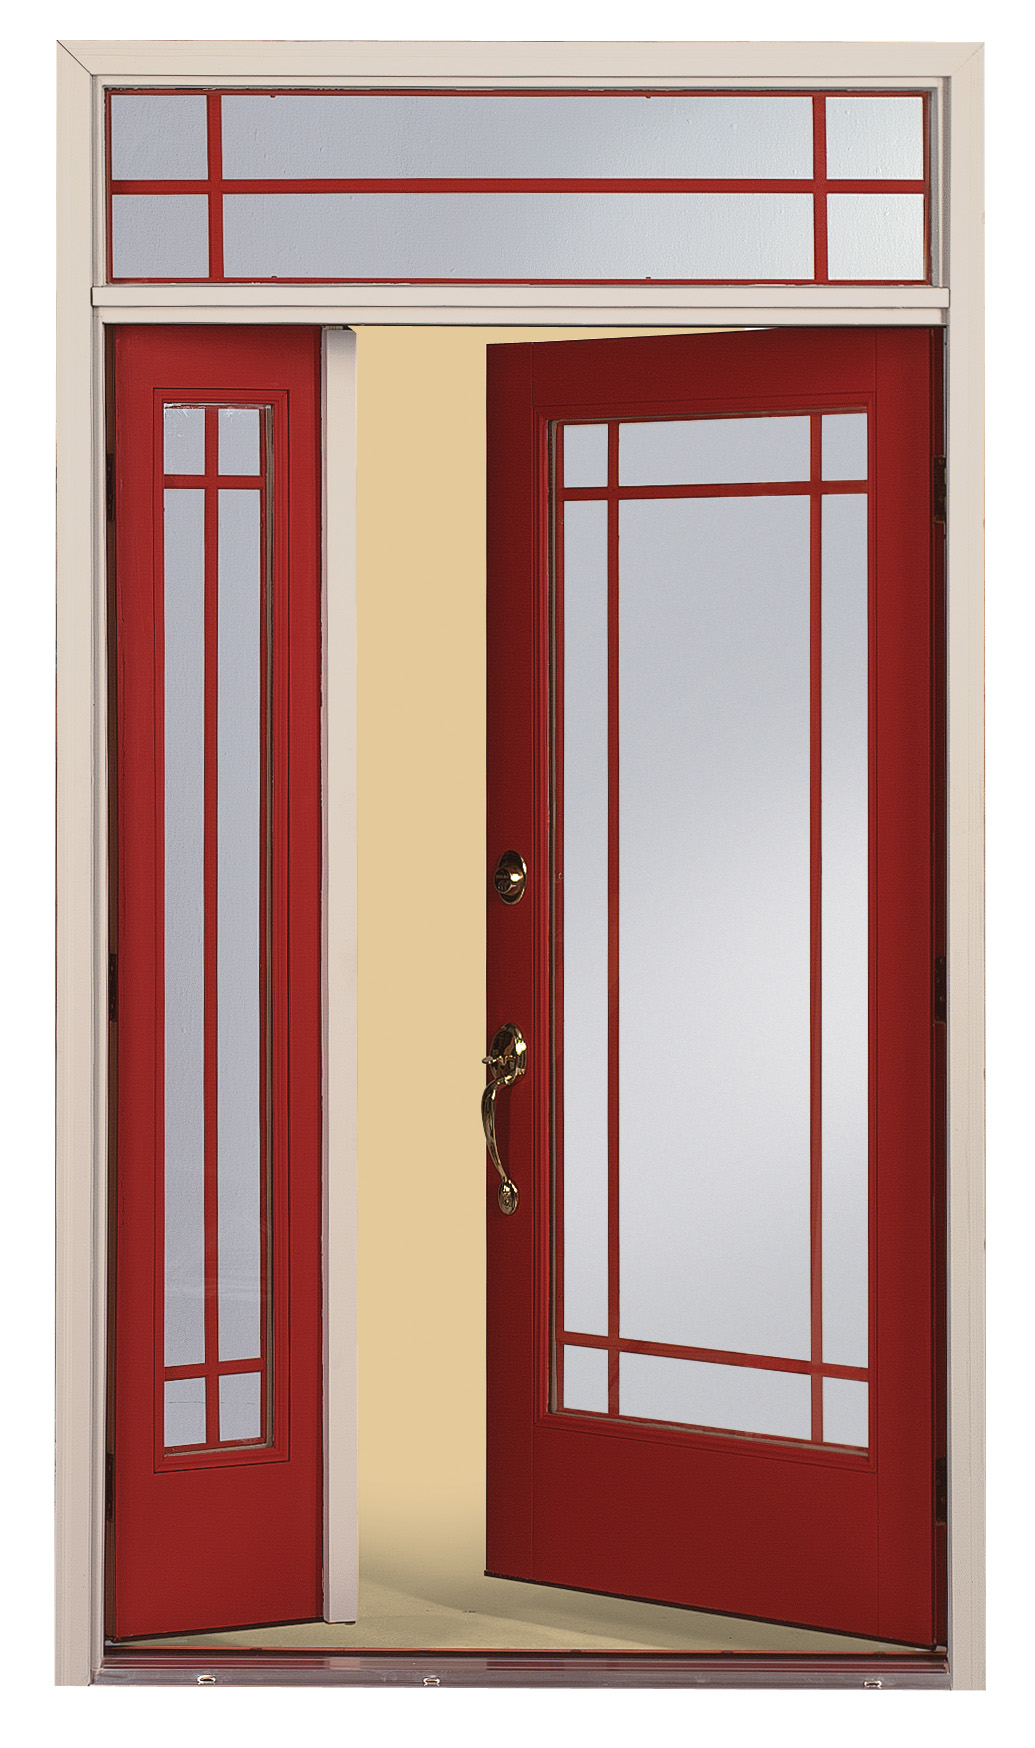 Peachtree Door & Peachtree Doors Weatherstrip Peachtree French Doors Exterior With Dimensions